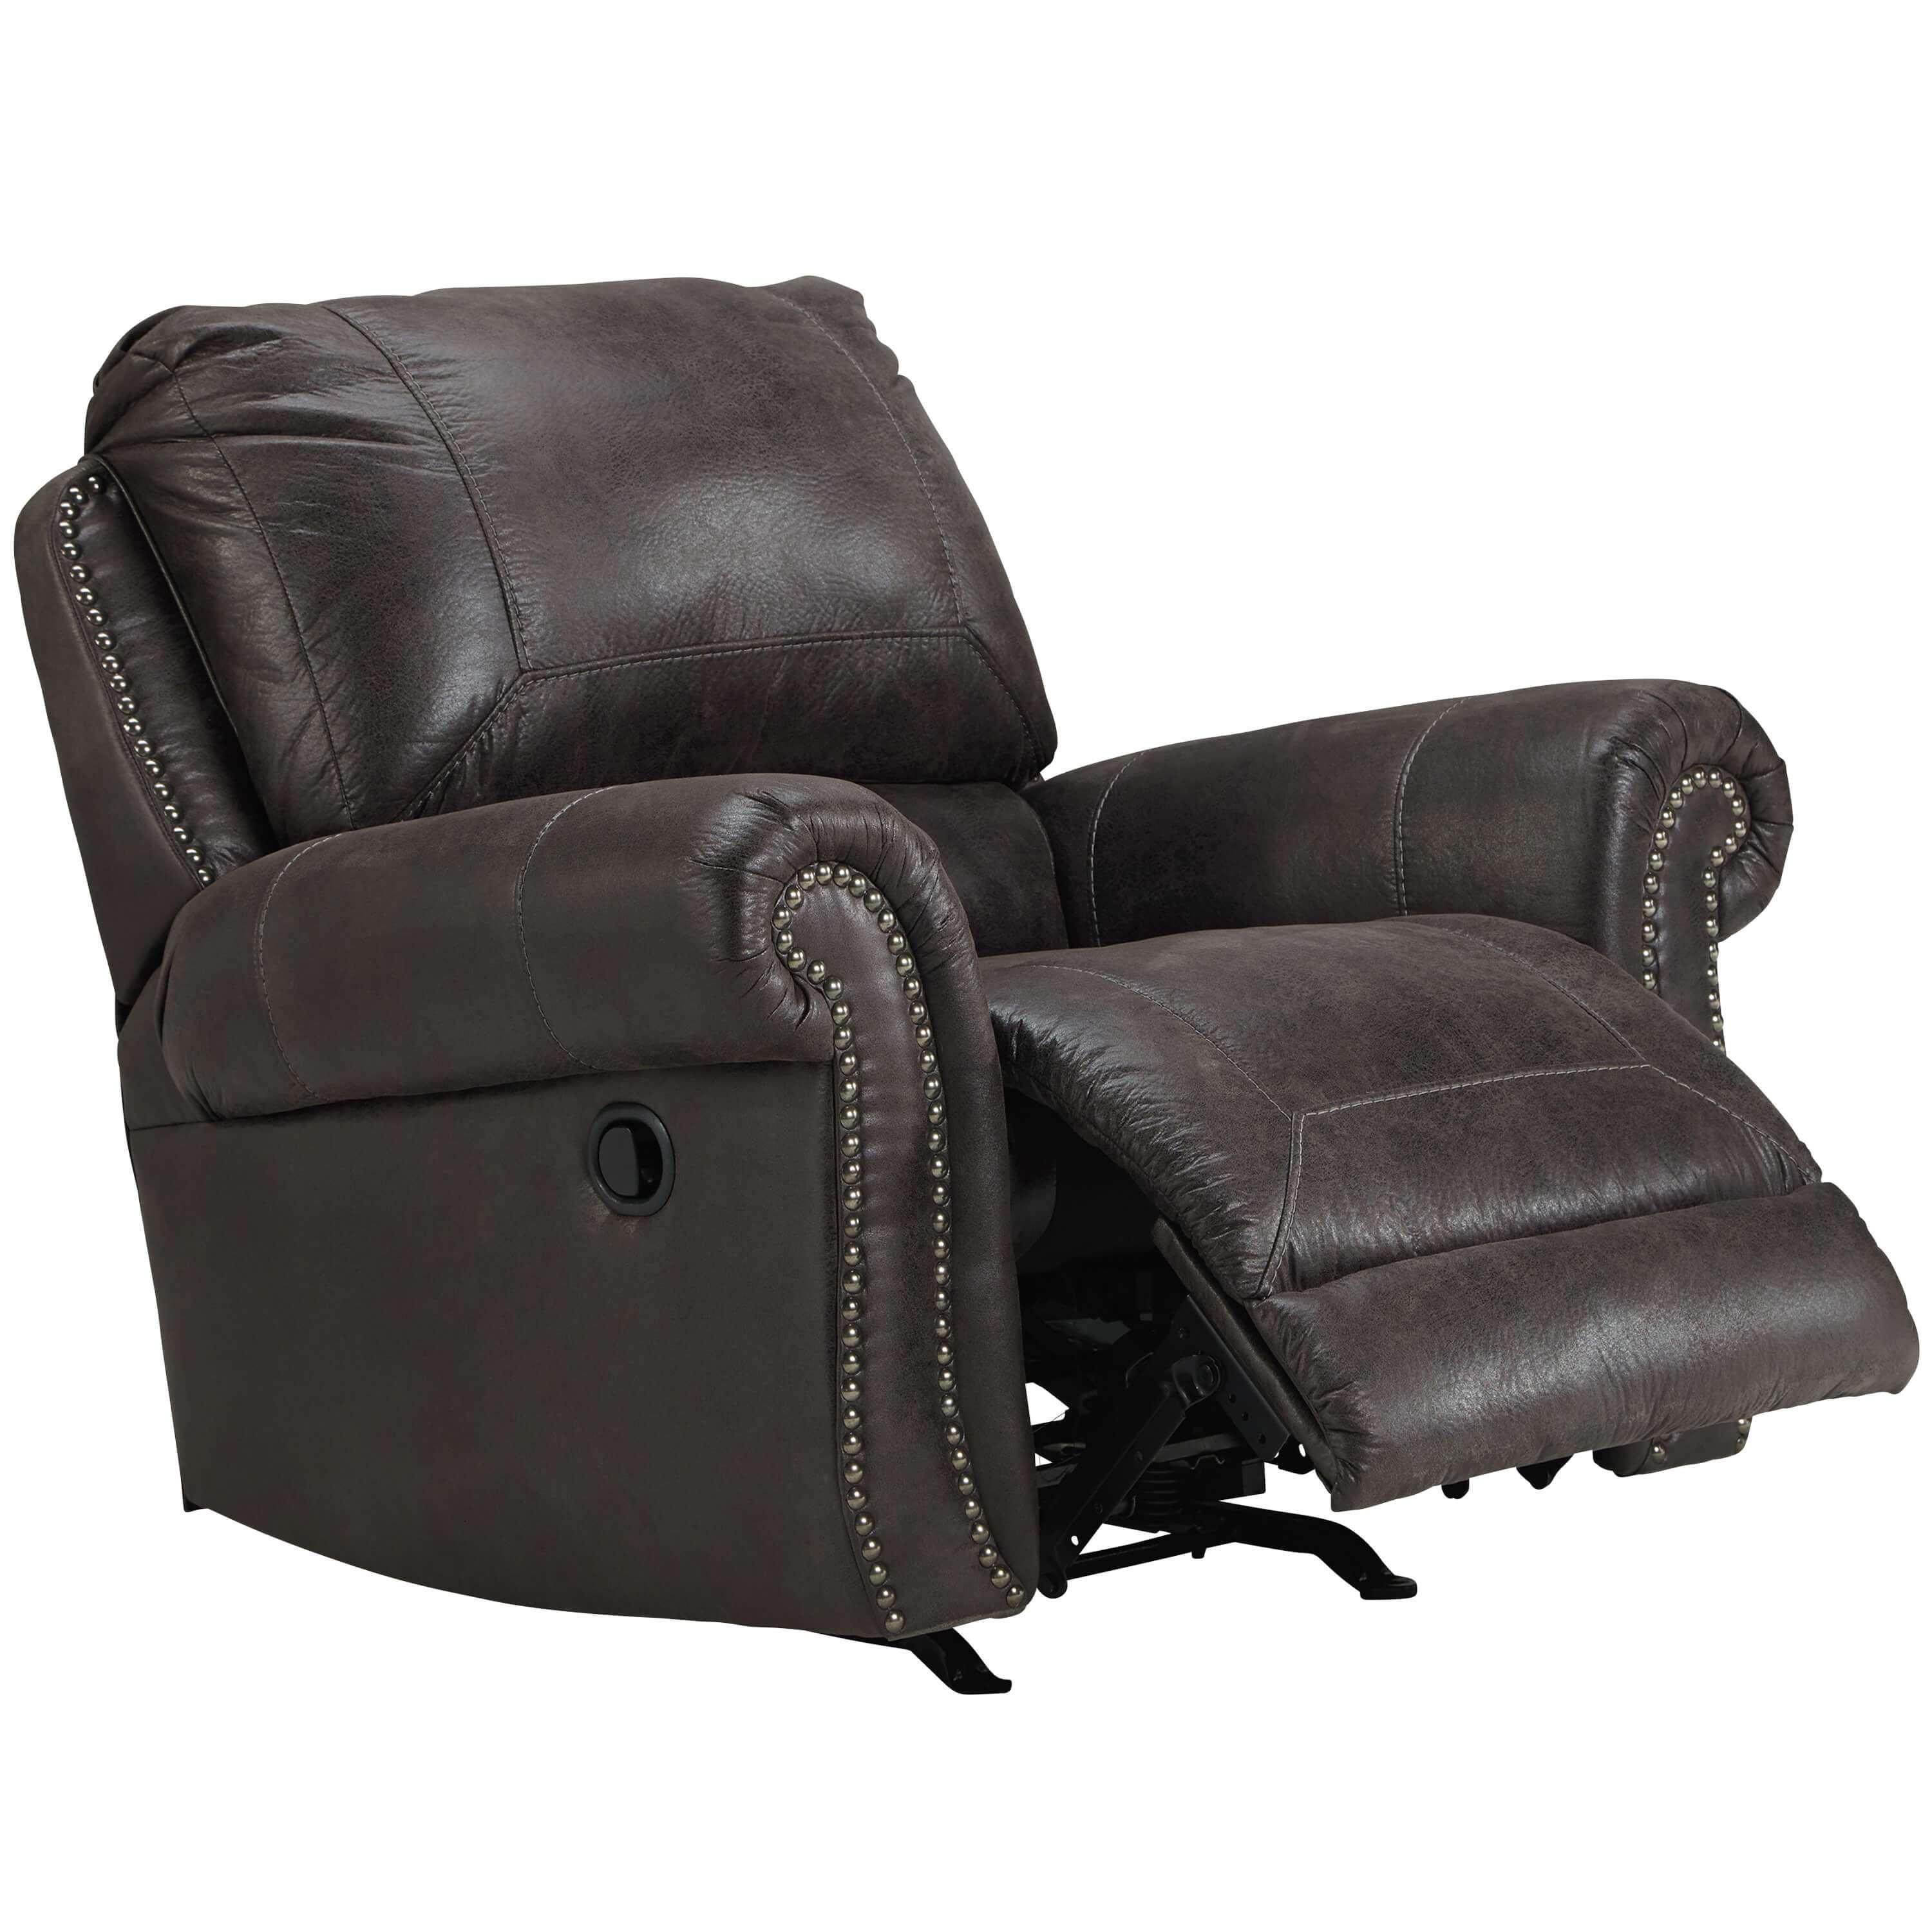 Leather rocker recliner leg extension view